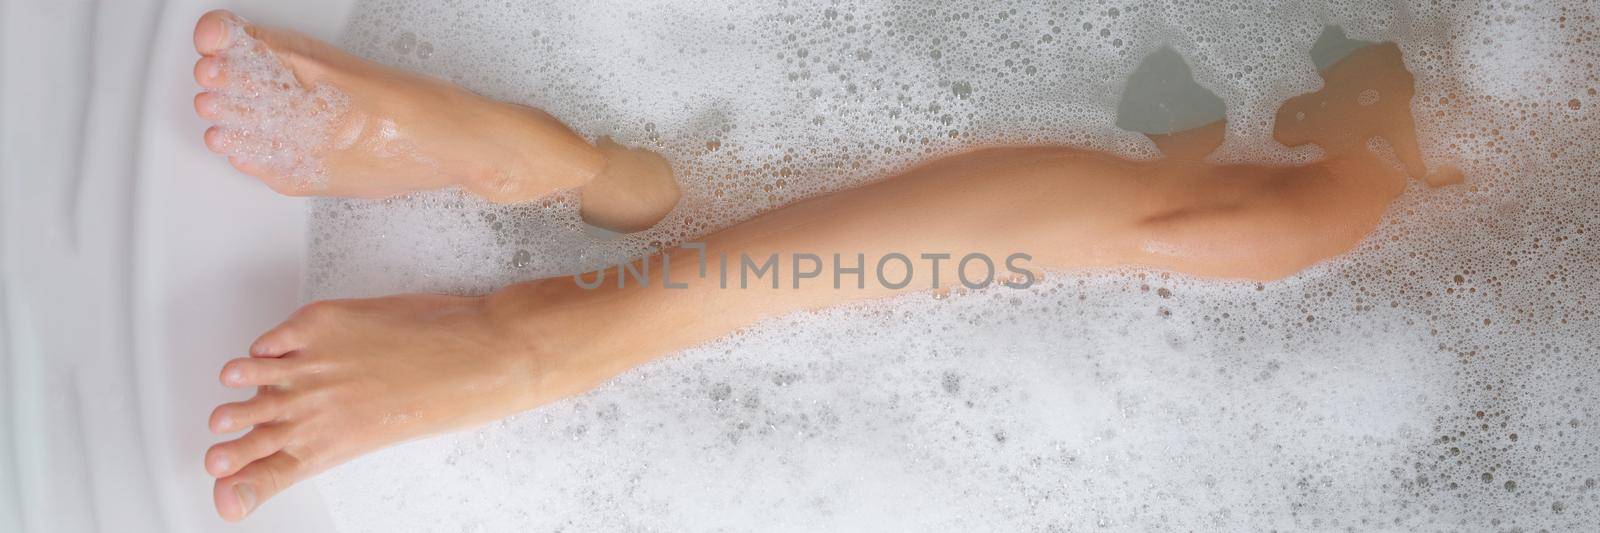 Slender female legs in a bathtub with soapy water, close-up. Bath foam, home aromatherapy, bath salt